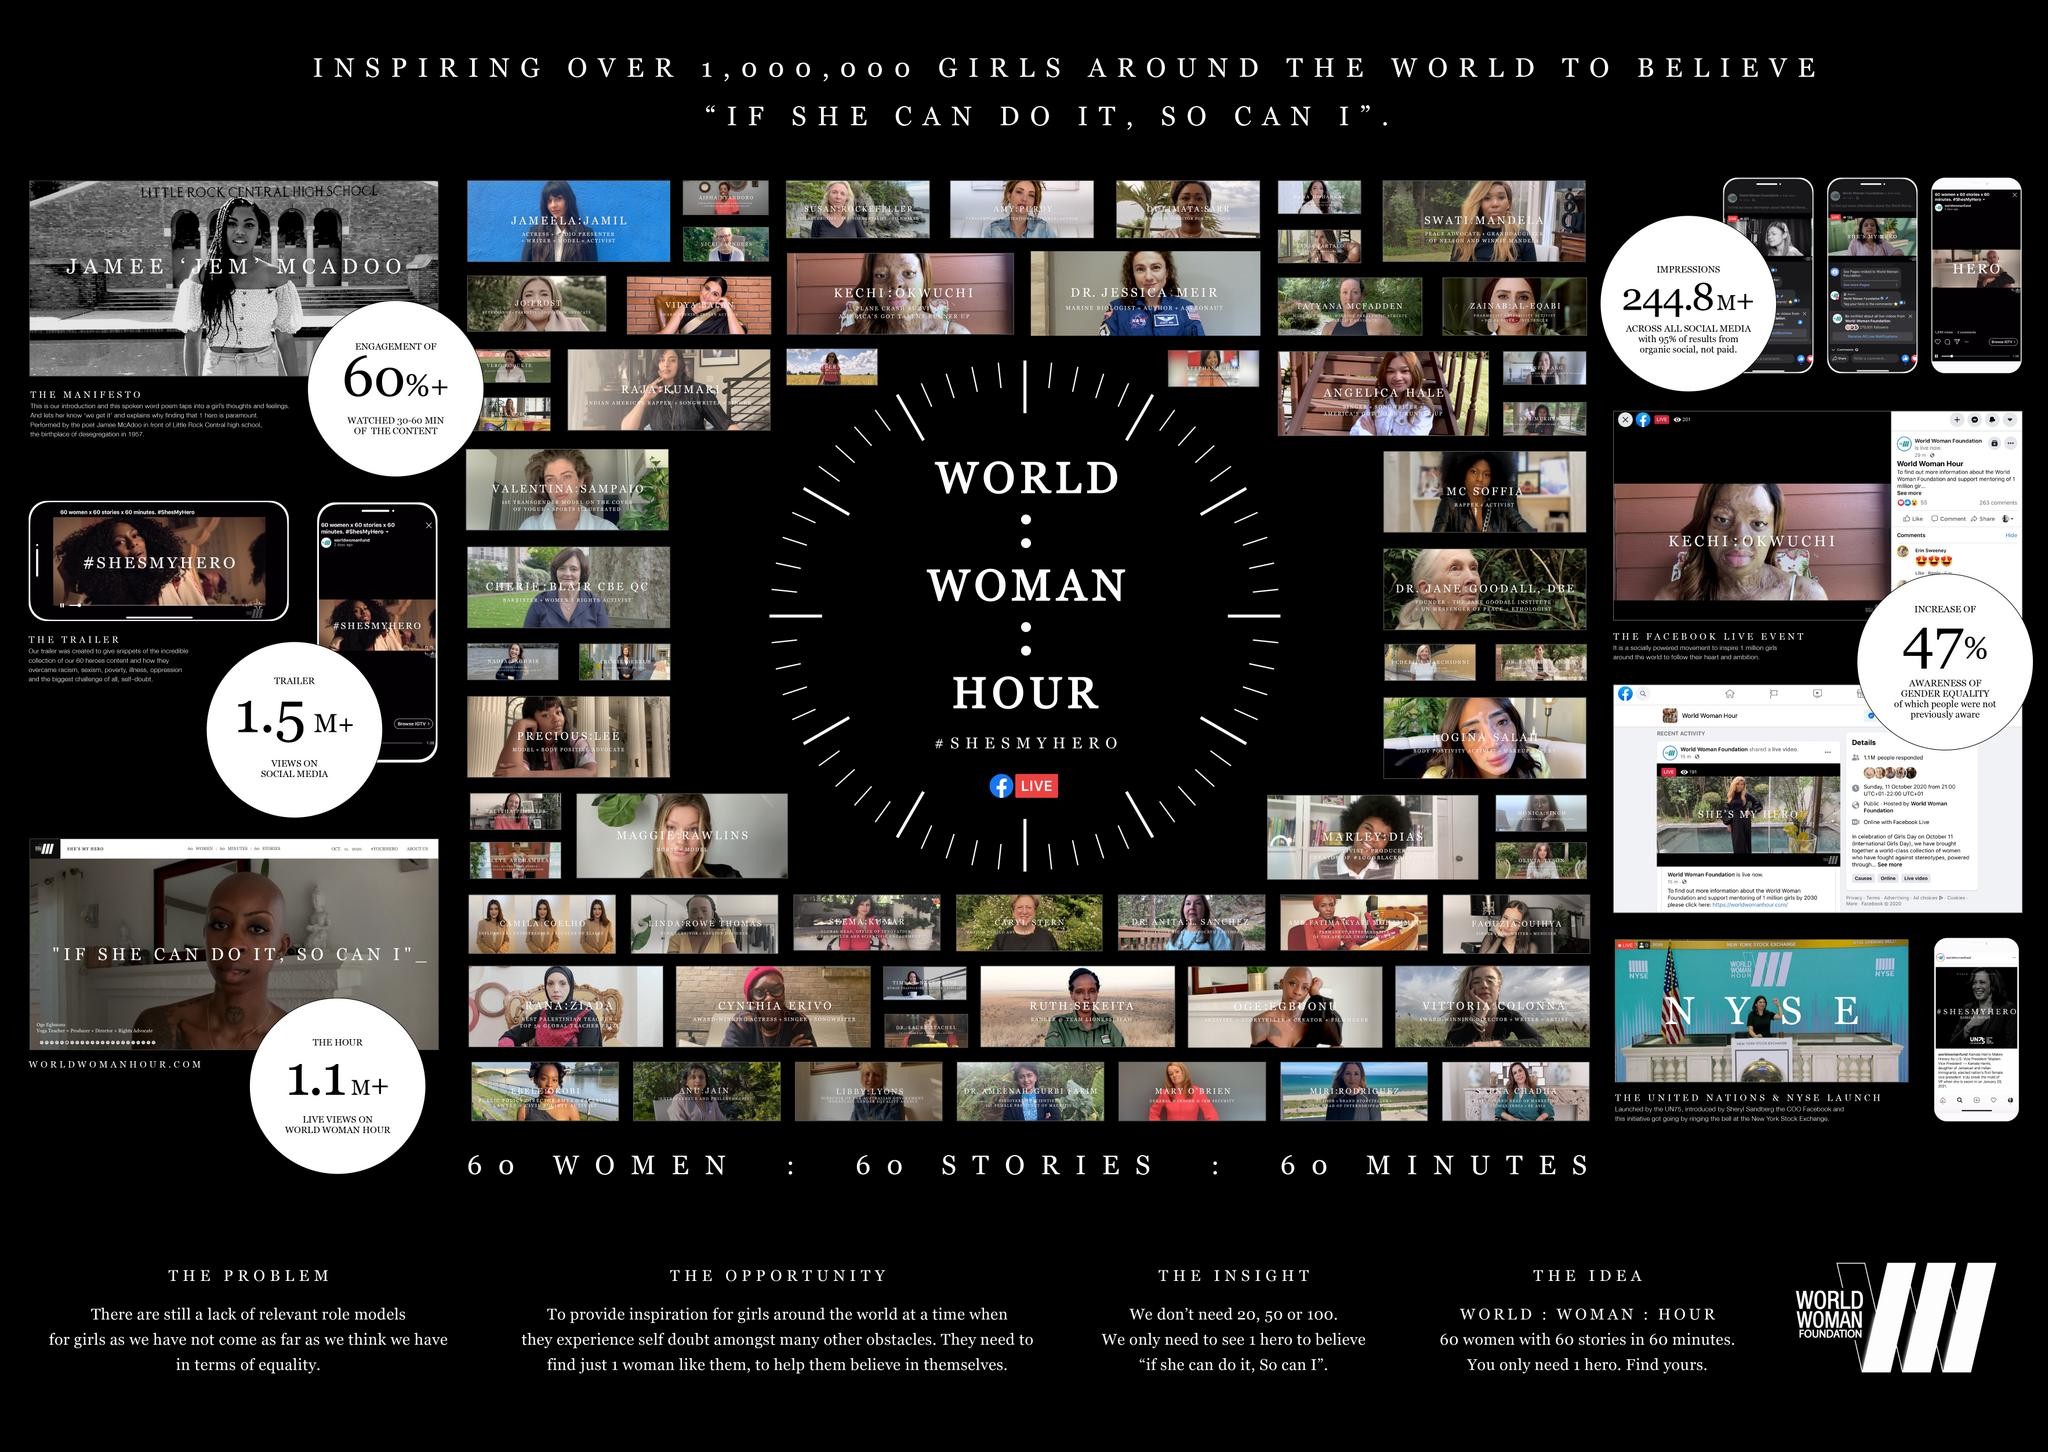 World Woman Hour